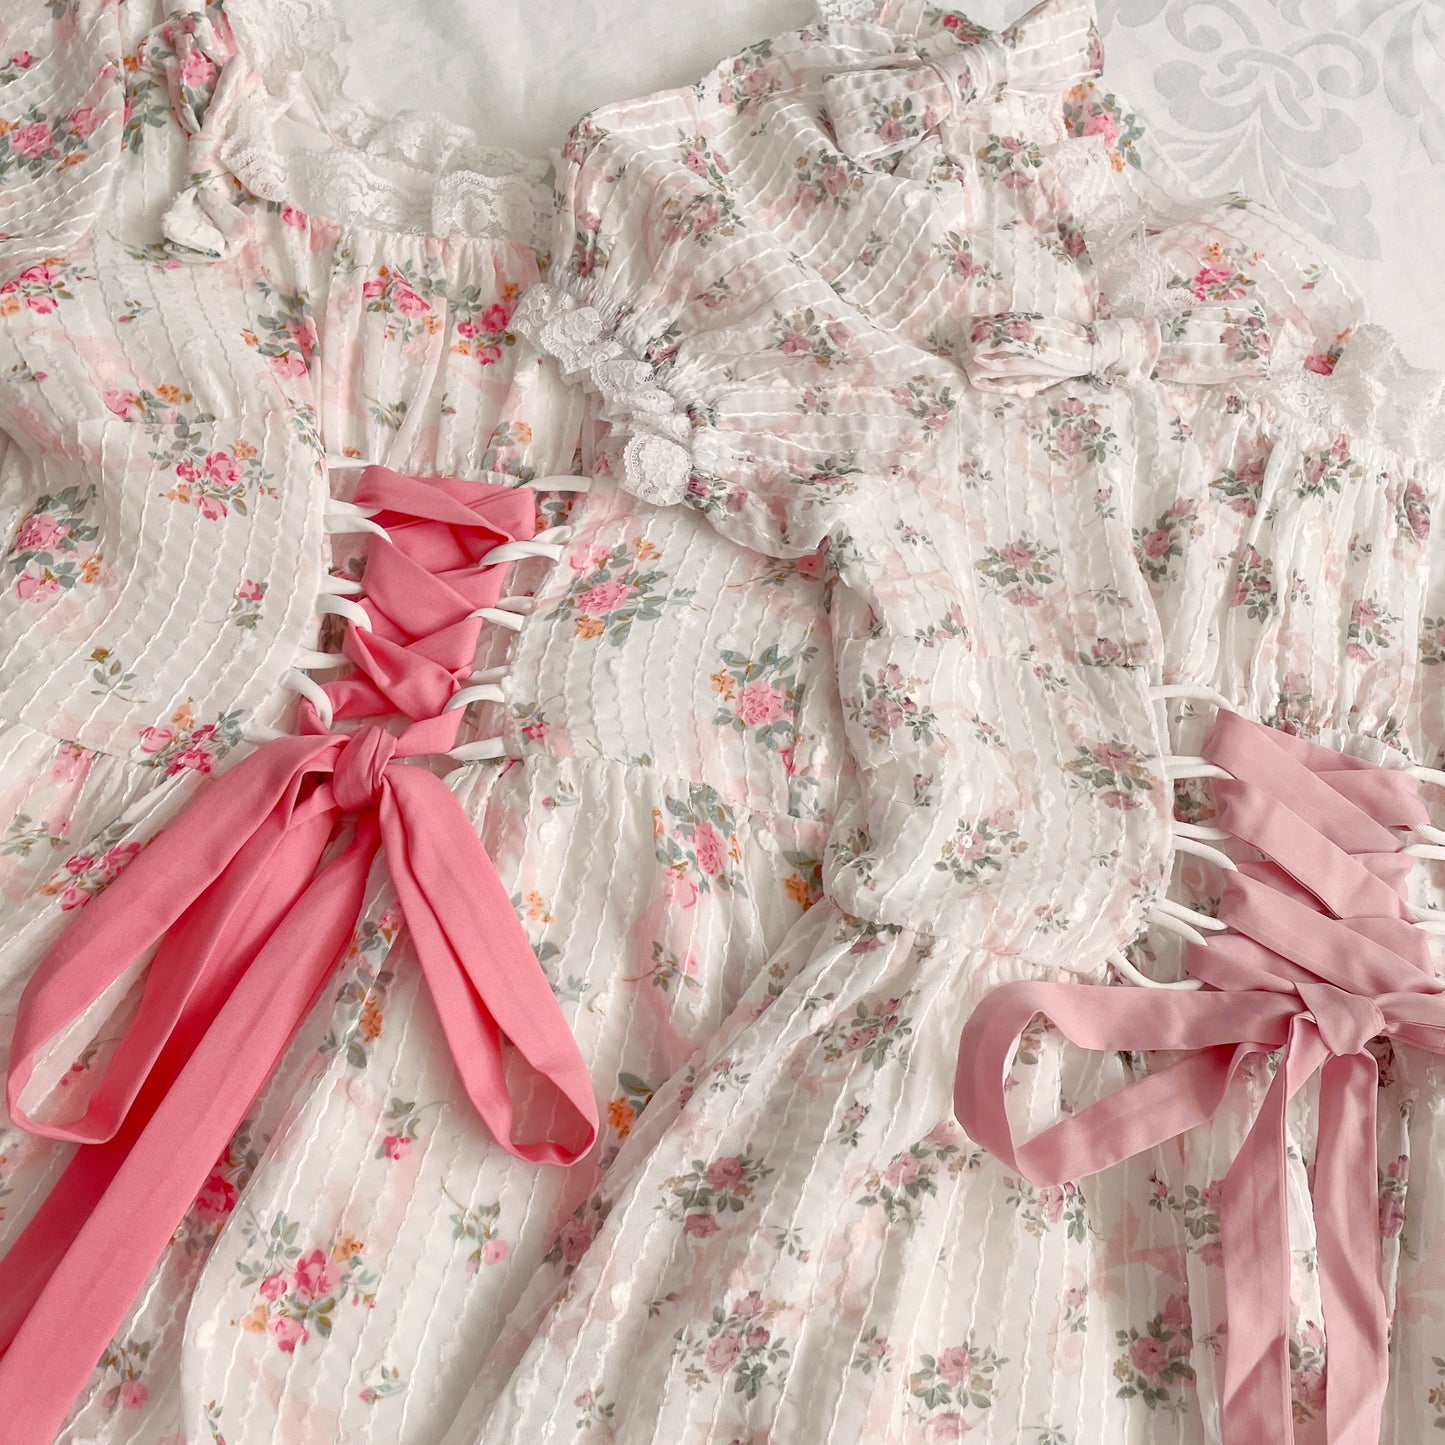 Spring Fling Lace Up Floral Dress (White/Pink)